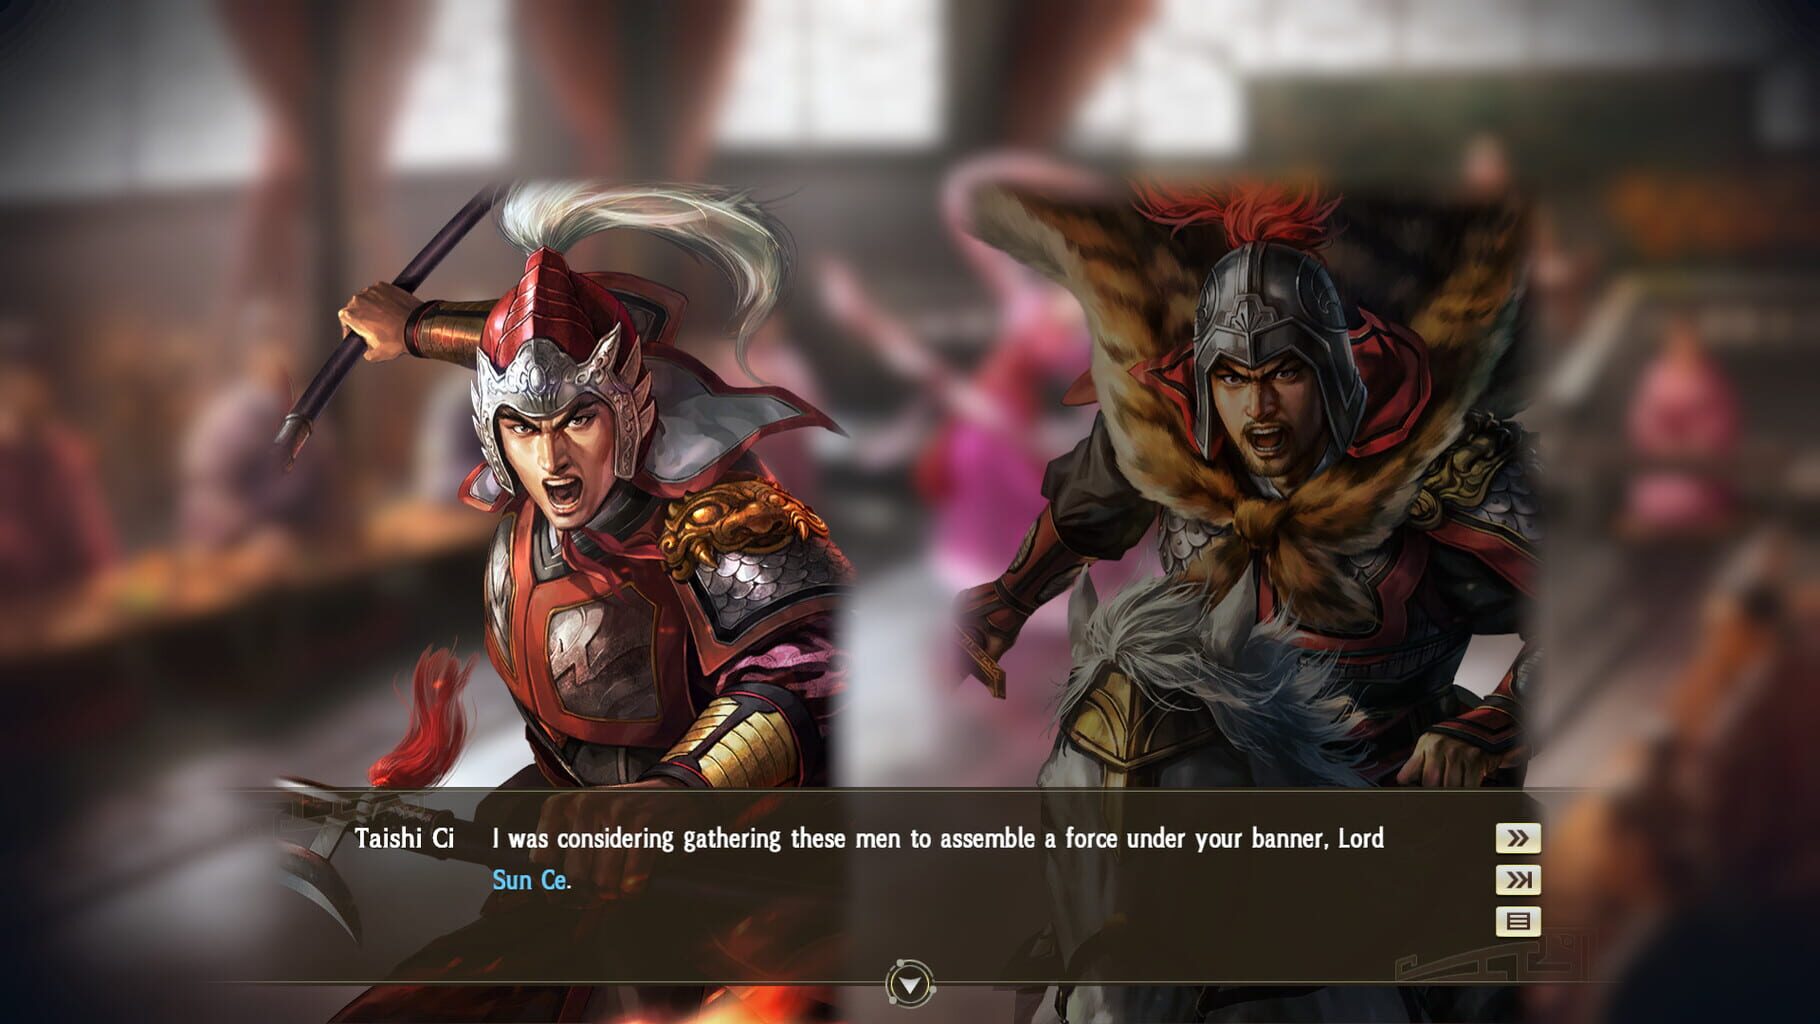 Romance of the Three Kingdoms XIII: Sun Ce Pushing Forward Event Set screenshot